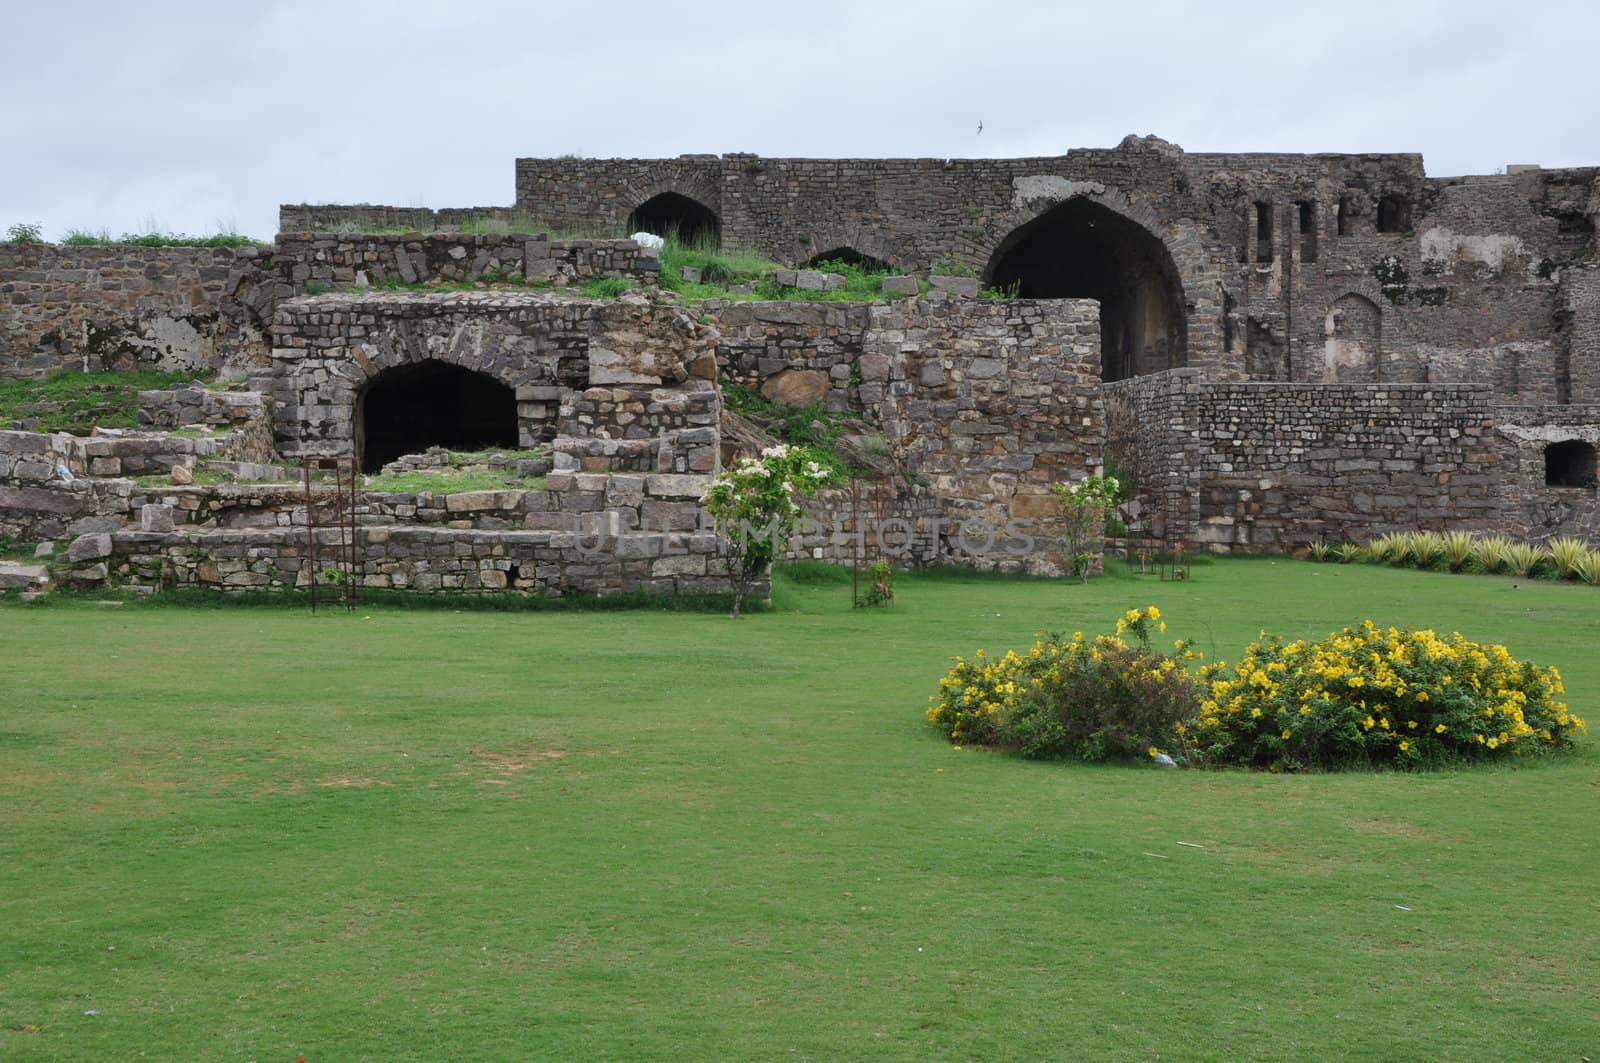 Golconda Fort in Hyderabad in Andhra Pradesh, India